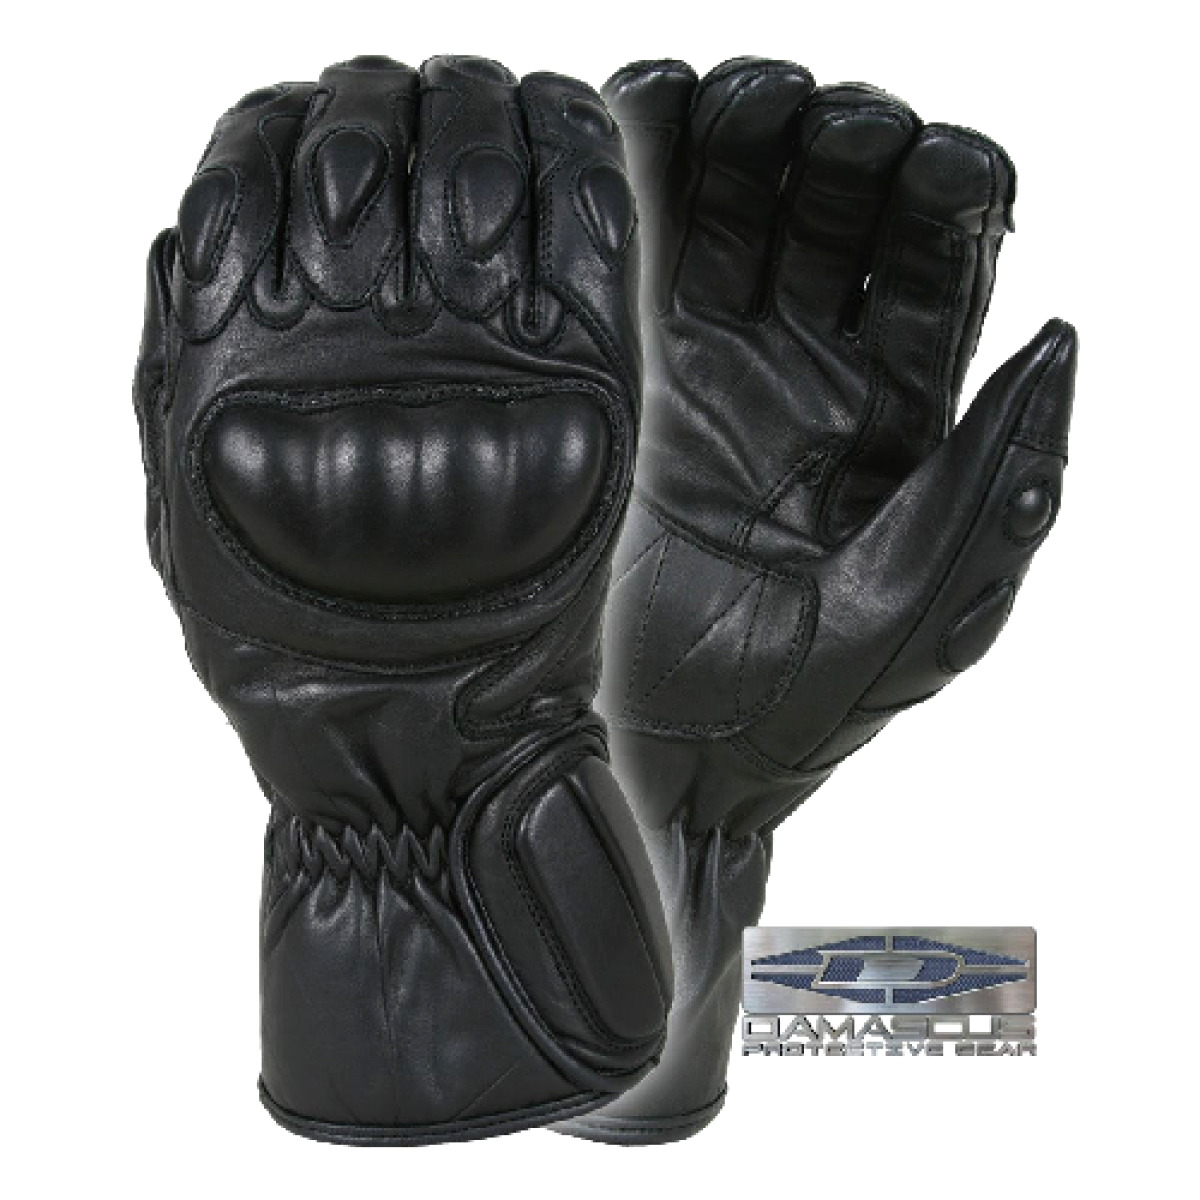 Vector 1 Riot Control Gloves - Black - Medium